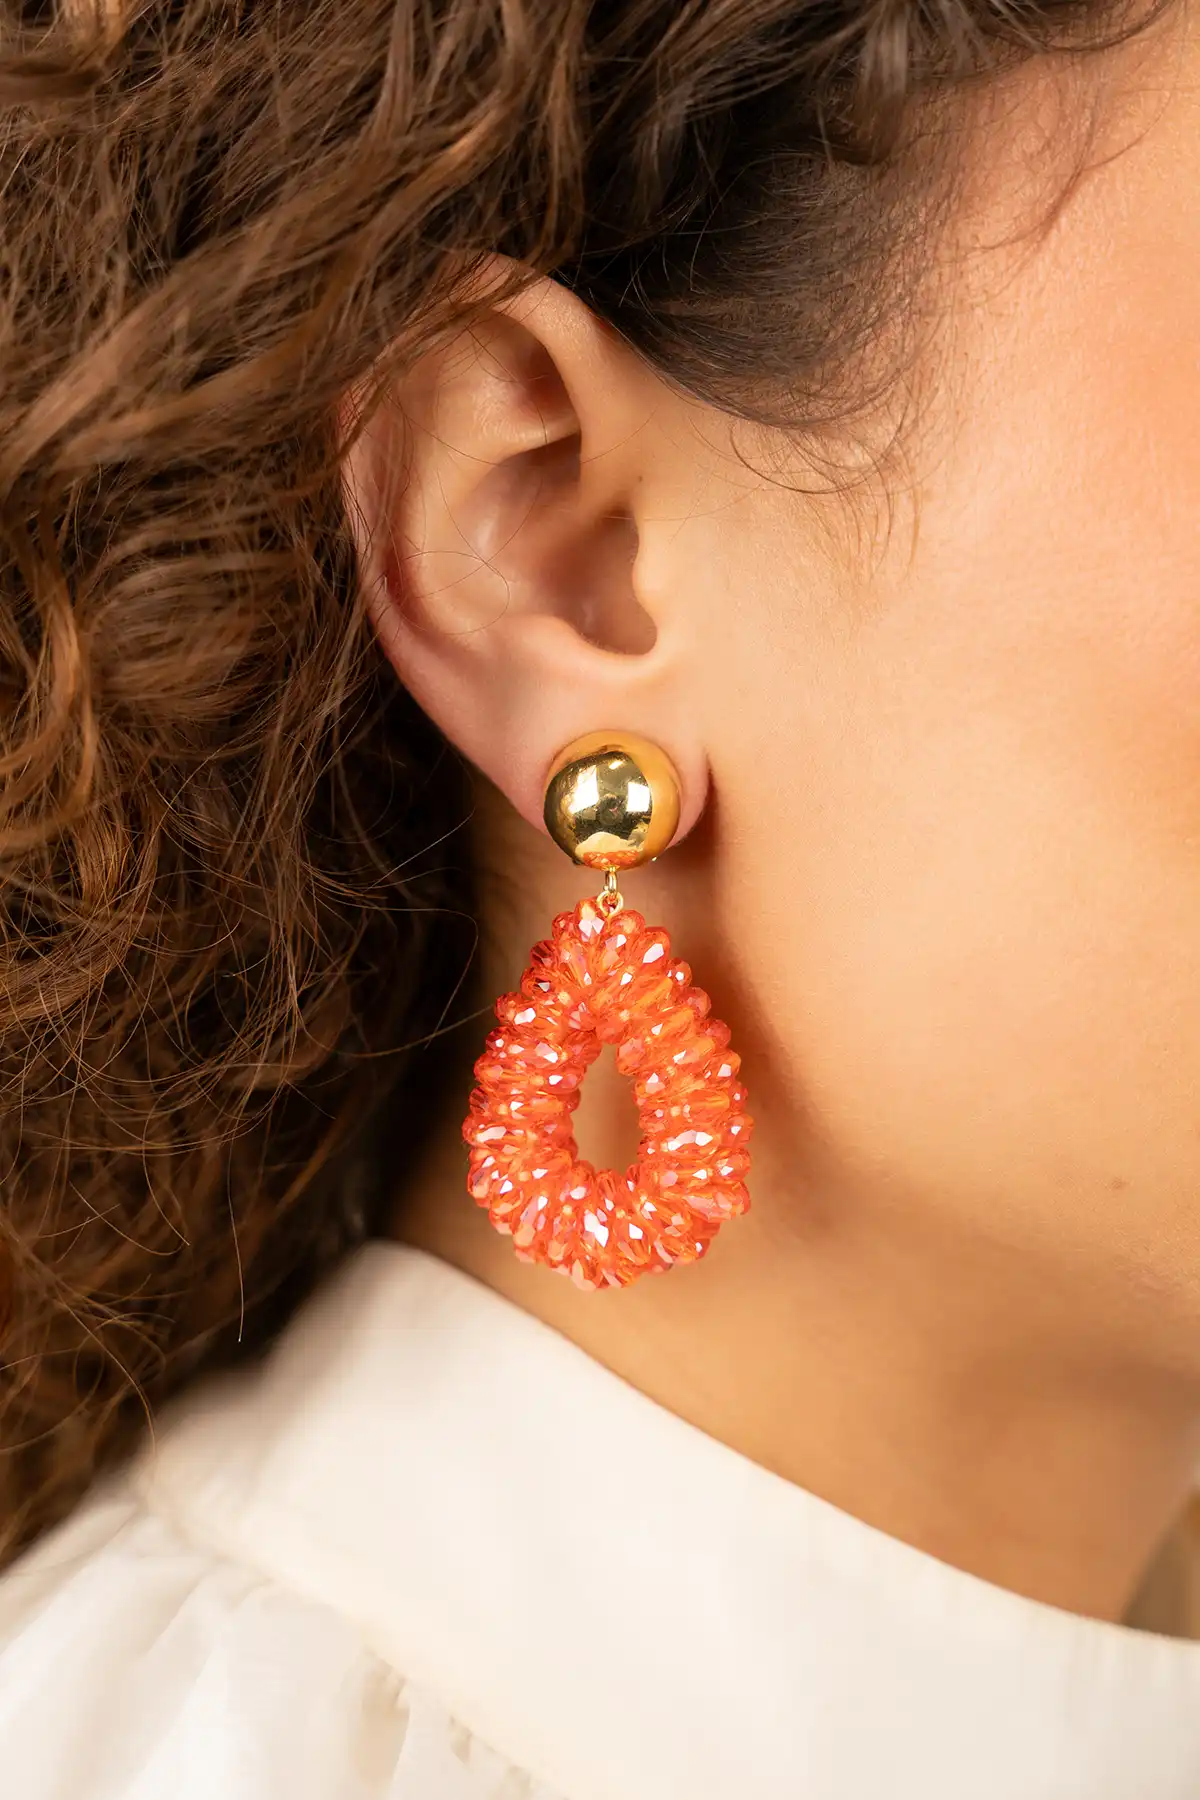 Orange earrings Anne Drop S marquis lion cliplott-theme.productDescriptionPage.SEO.byTheBrand